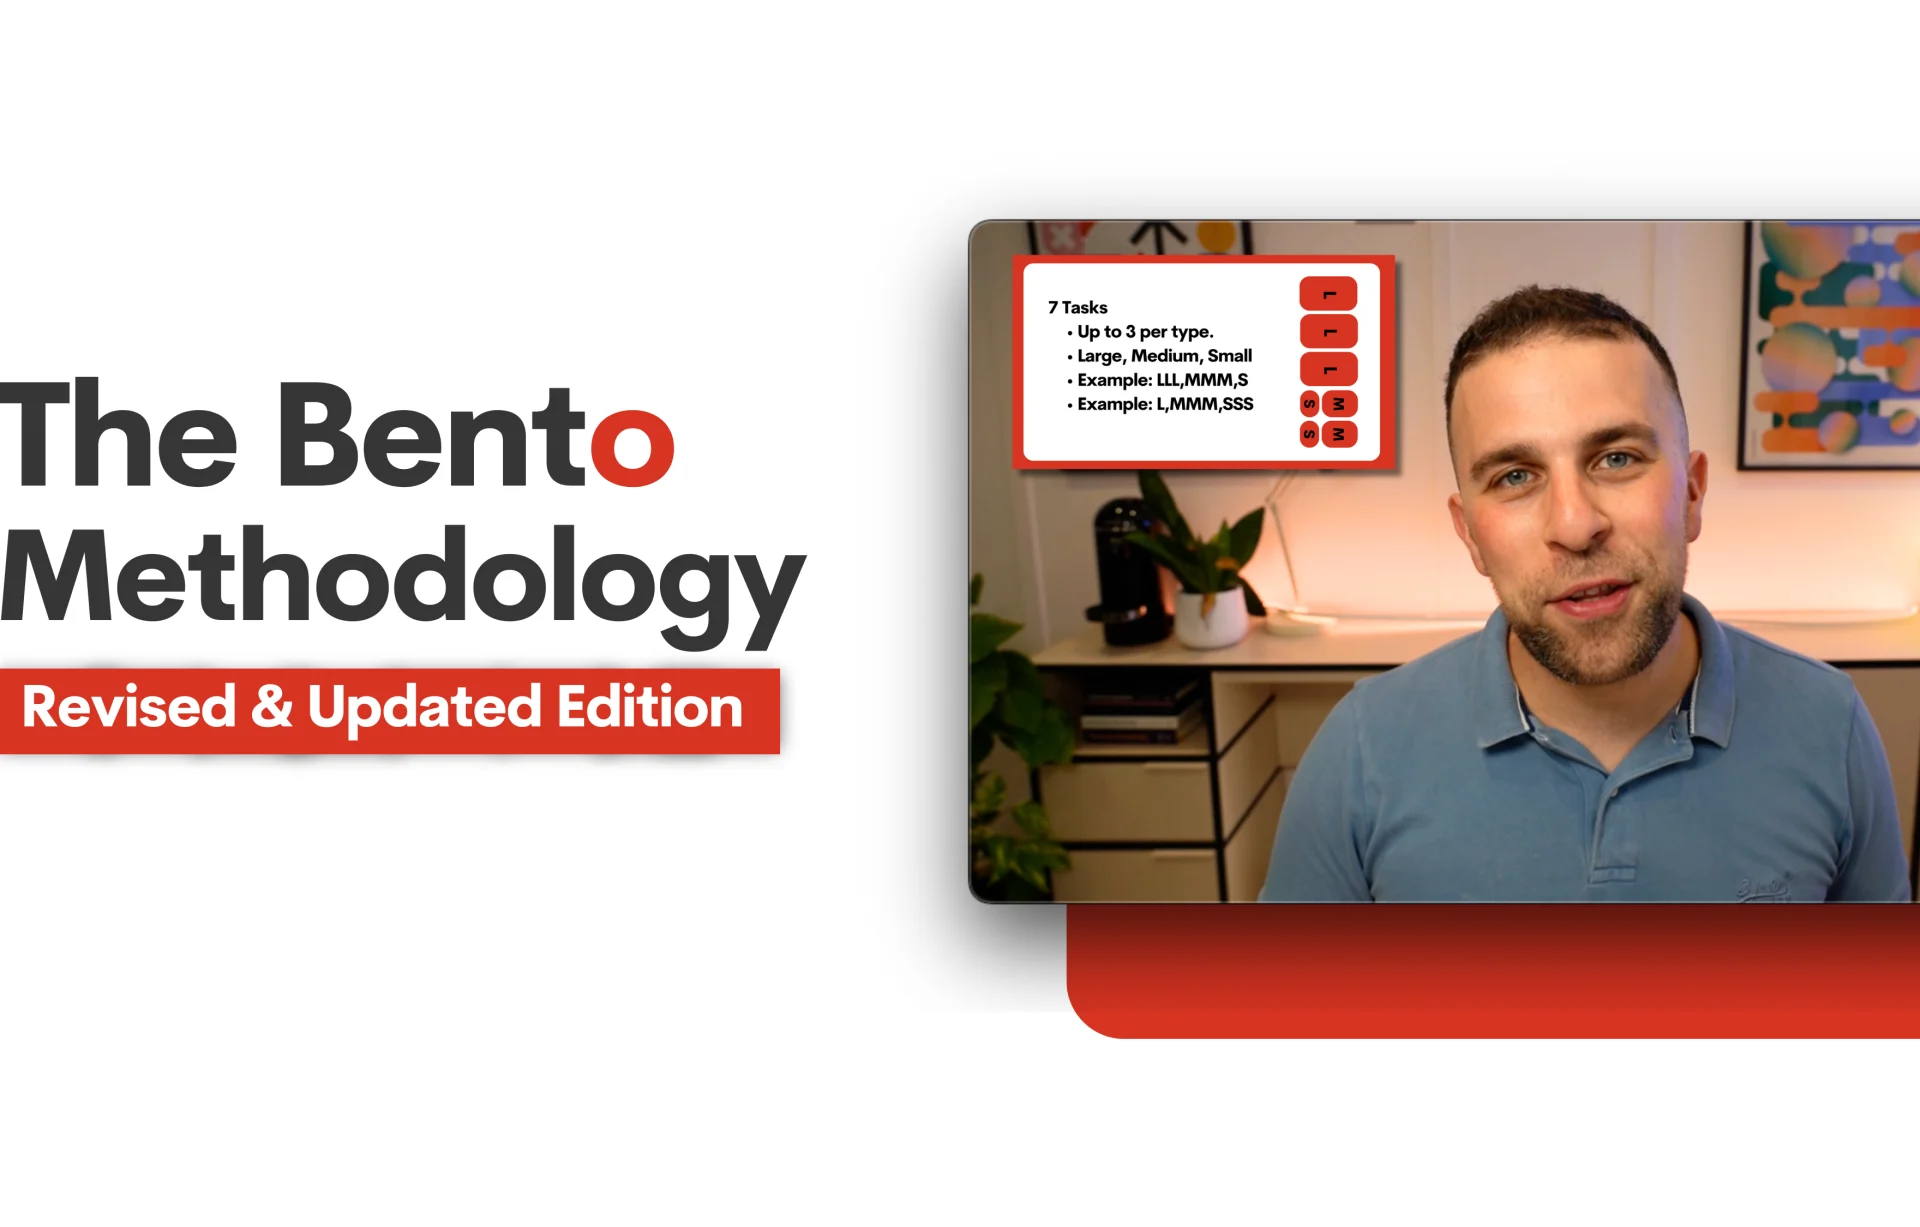 The Bento Methodology Course 2.0